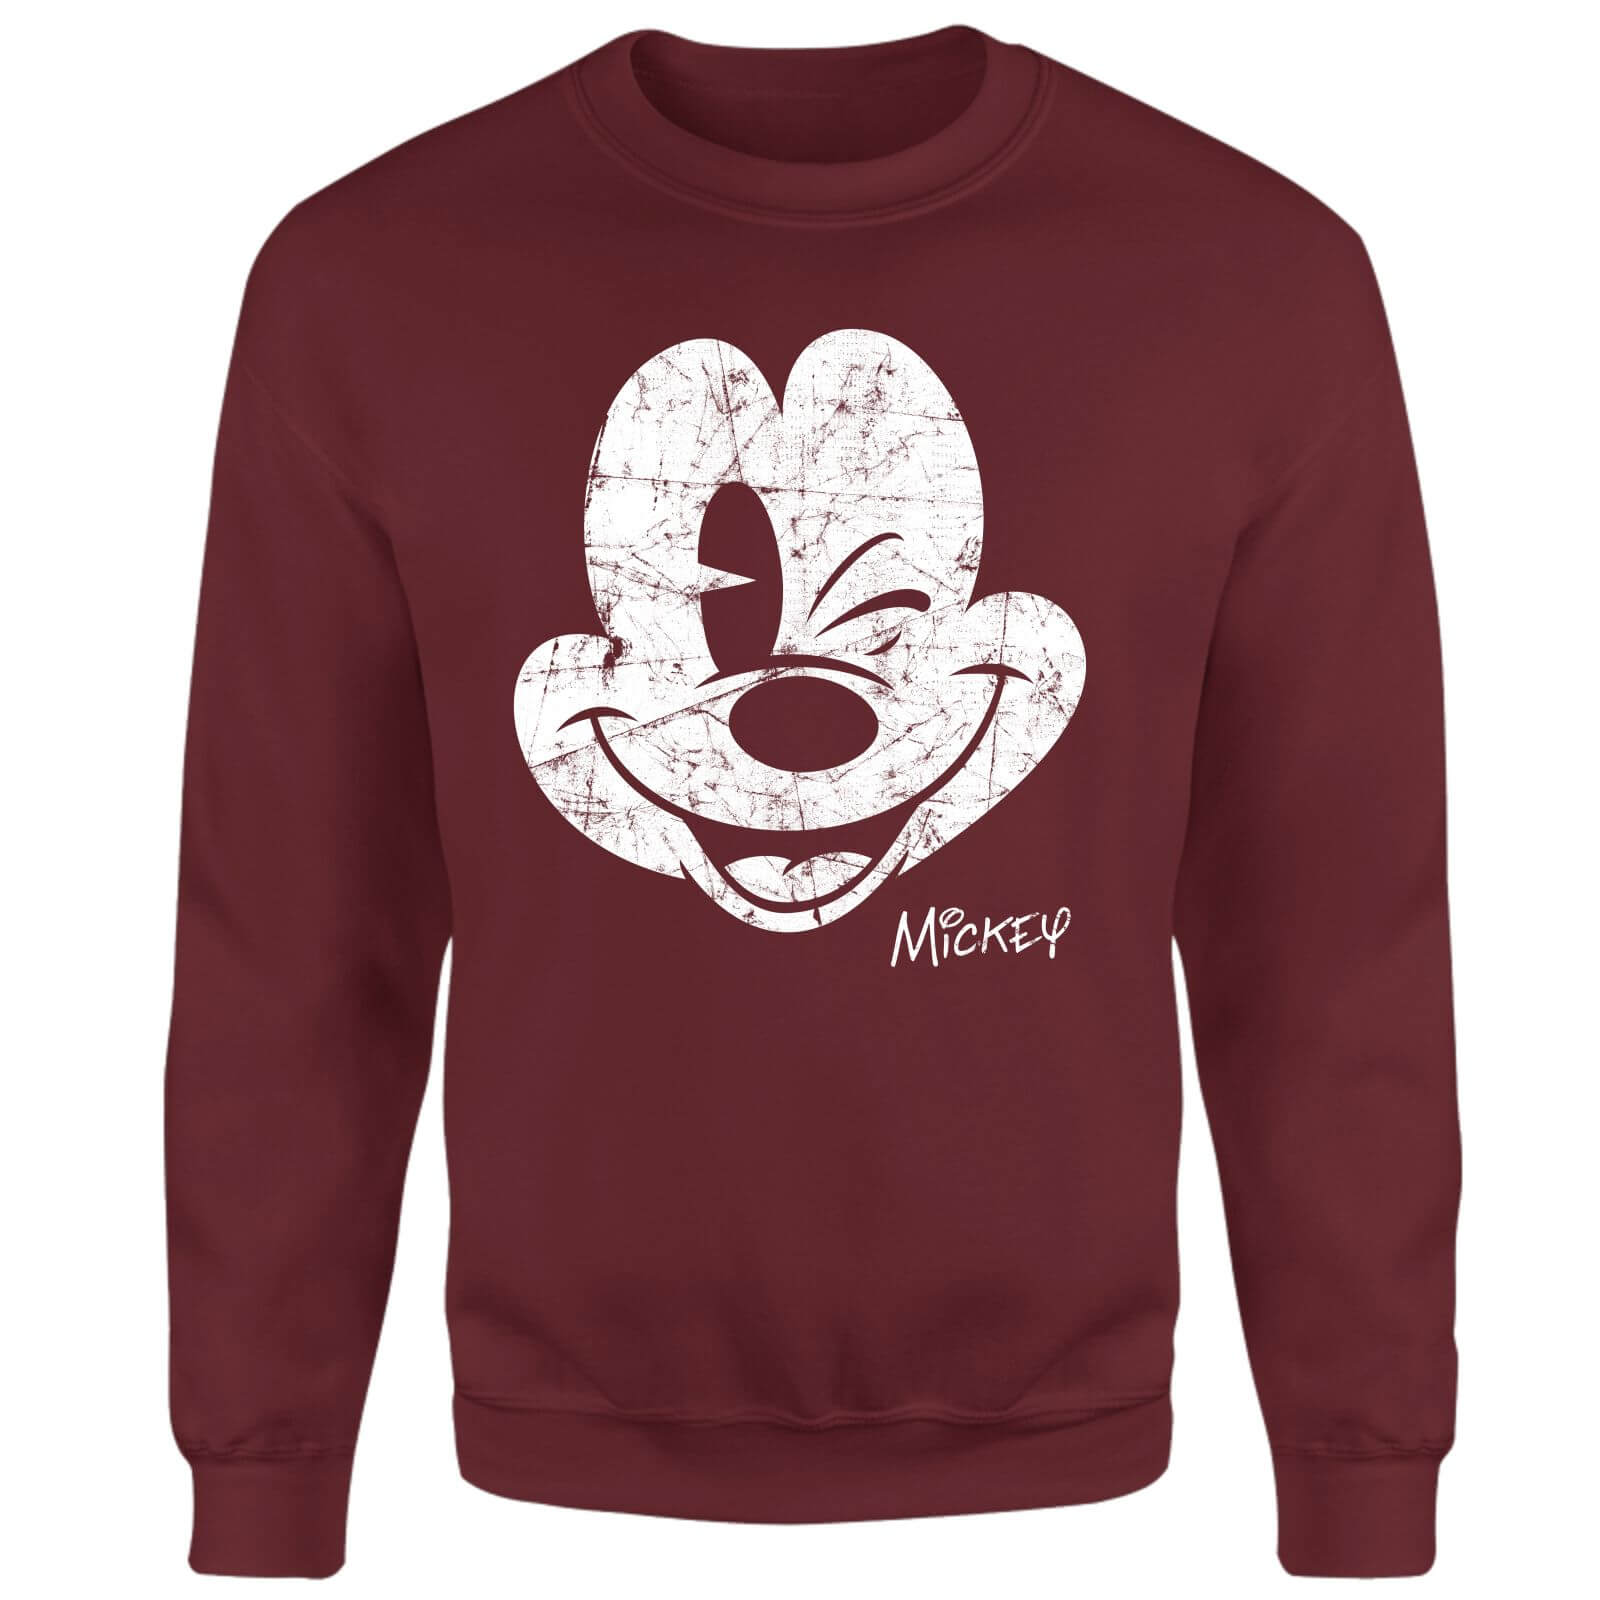 Mickey Mouse Worn Face Sweatshirt - Burgundy - M - Burgundy